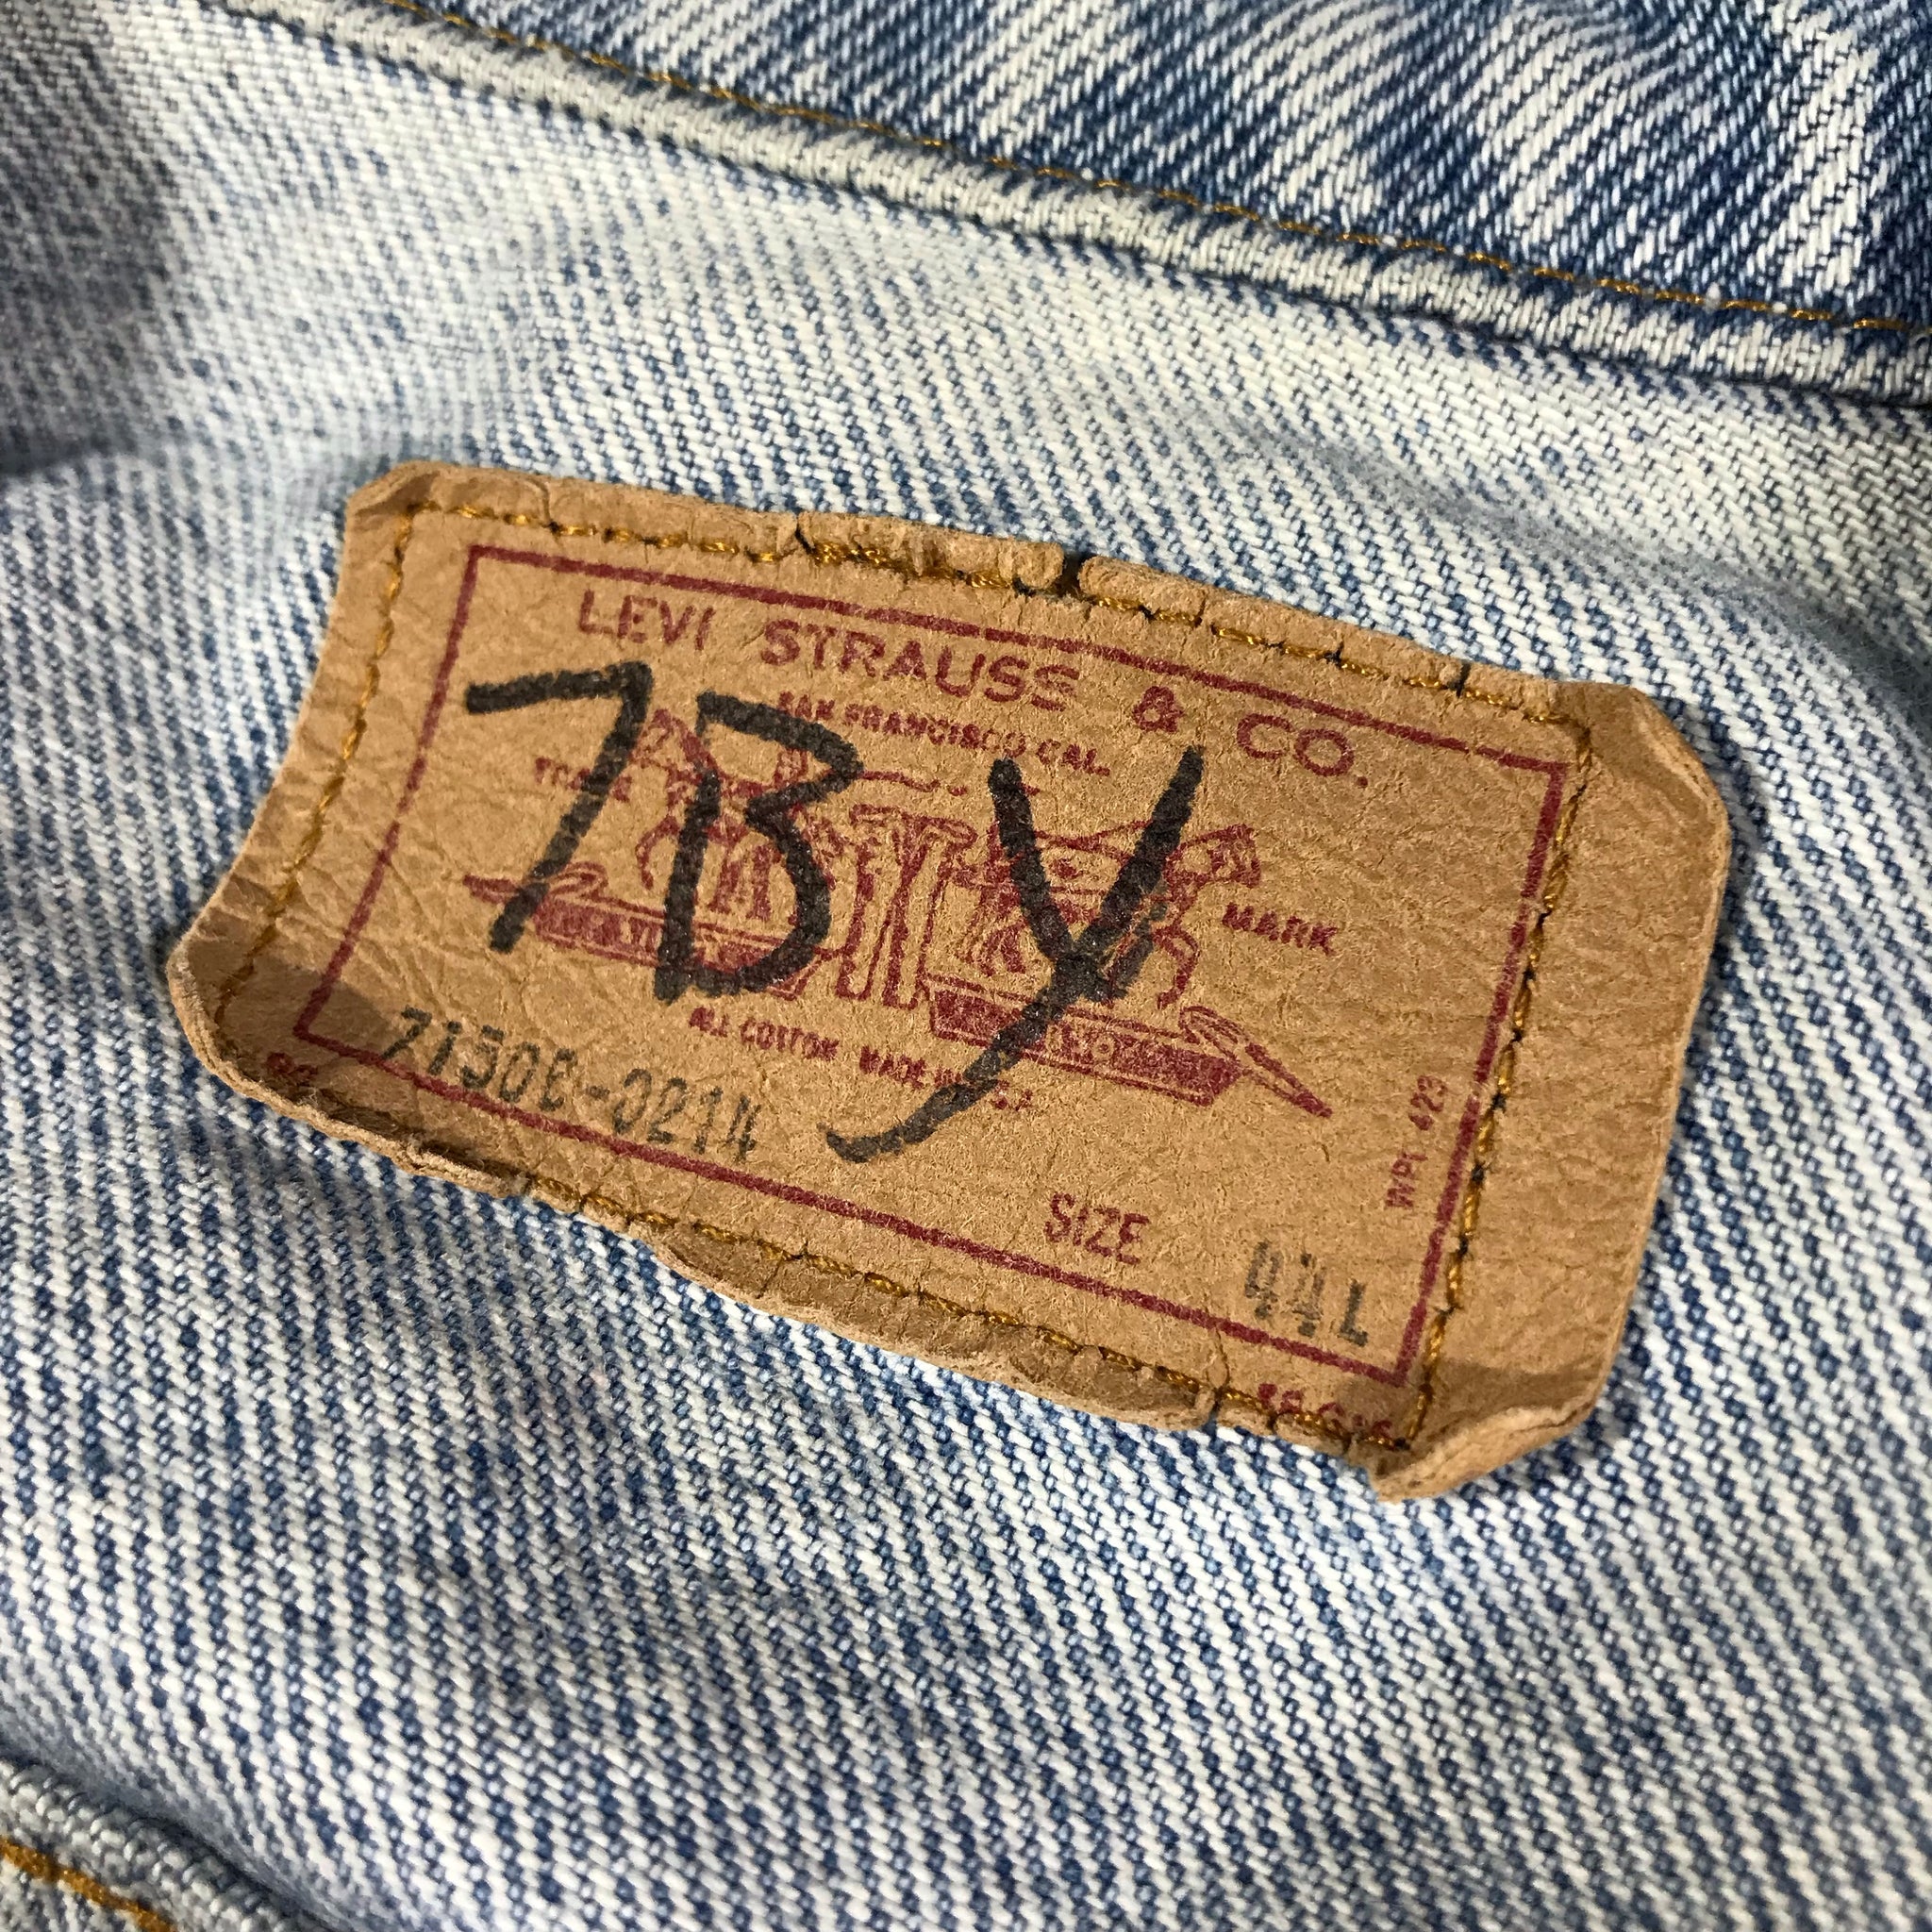 Levis Denim Jacket Made in USA 44L